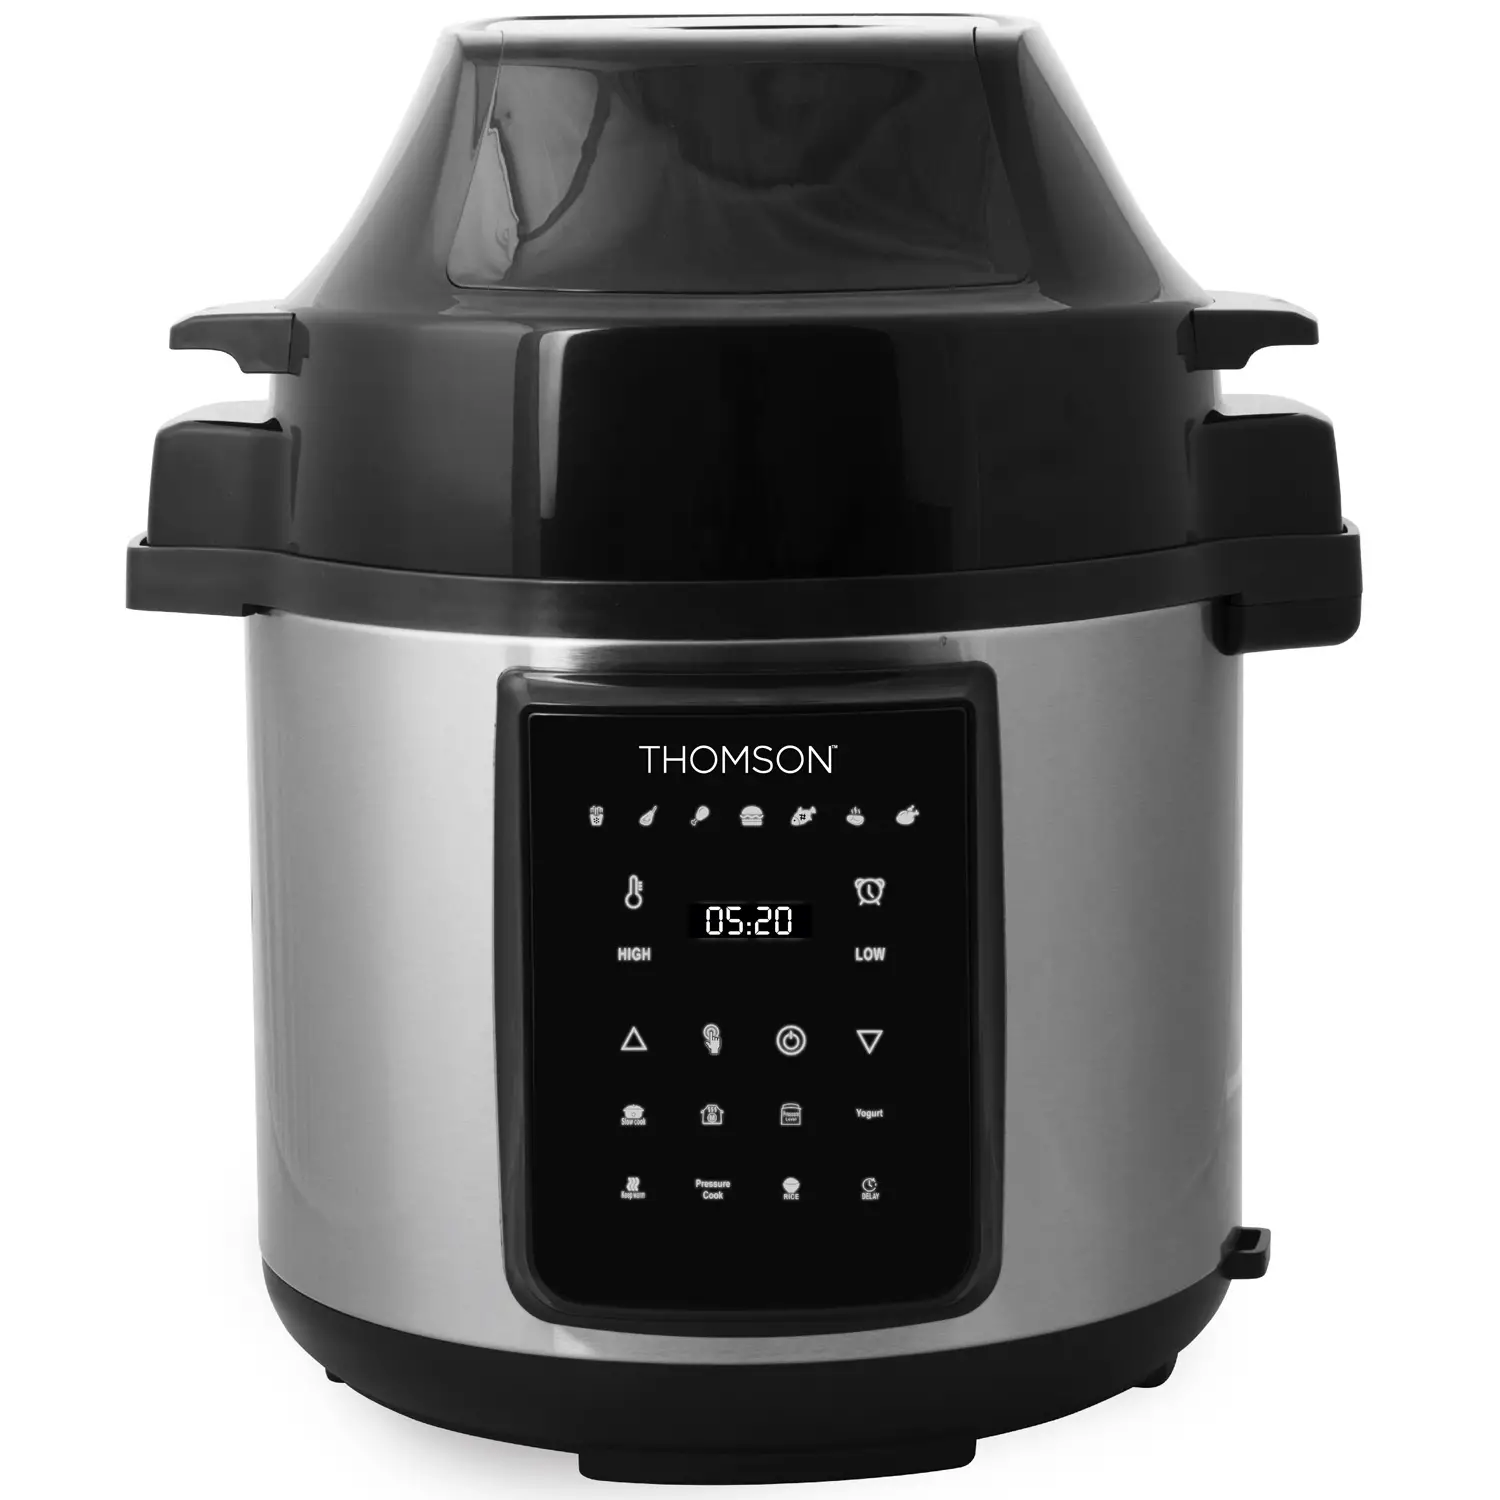 Thomson 6.5QT Digital Air Fryer, Pressure Cooker, &  Slow Cooker All